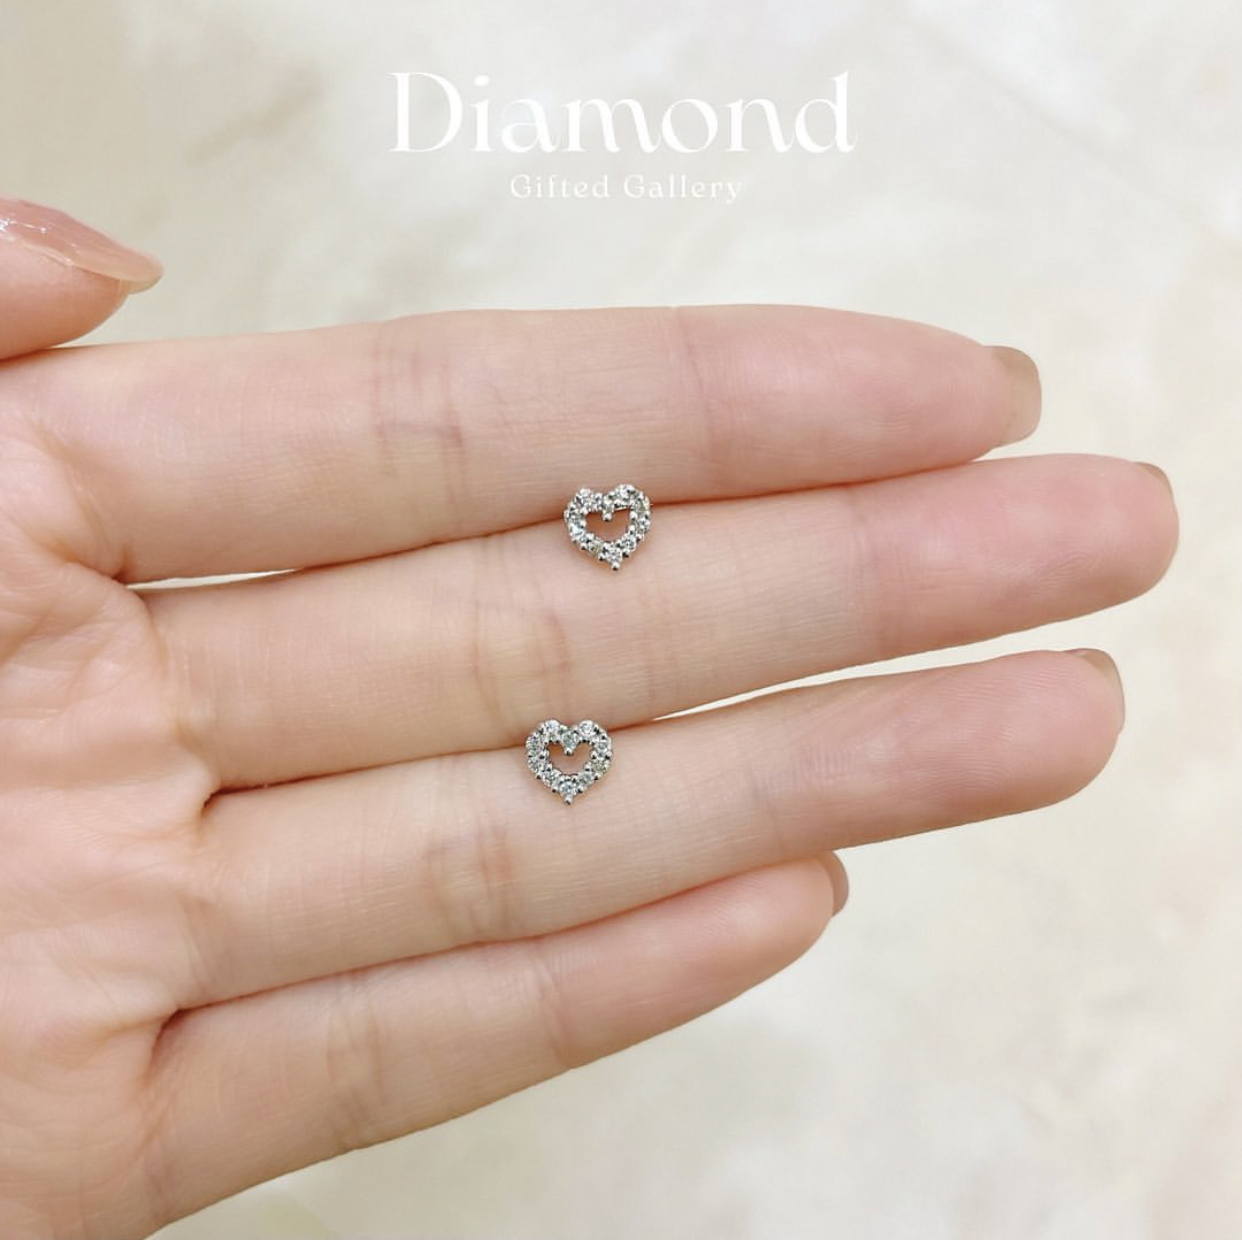 Diamond Earrings By Gifted Gallery